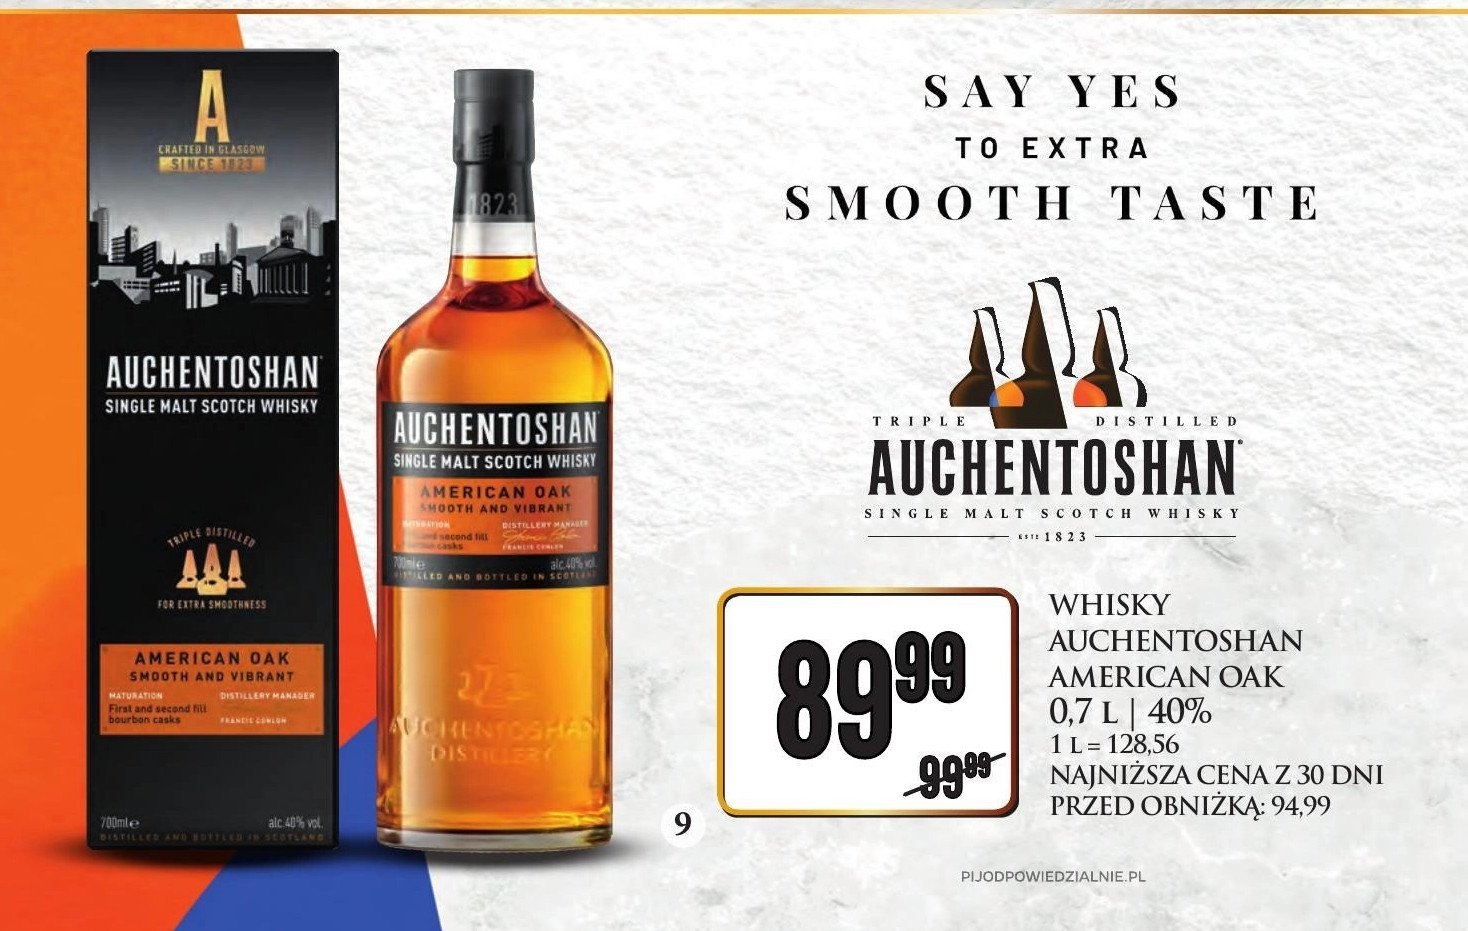 Whisky karton Auchentoshan american oak promocja